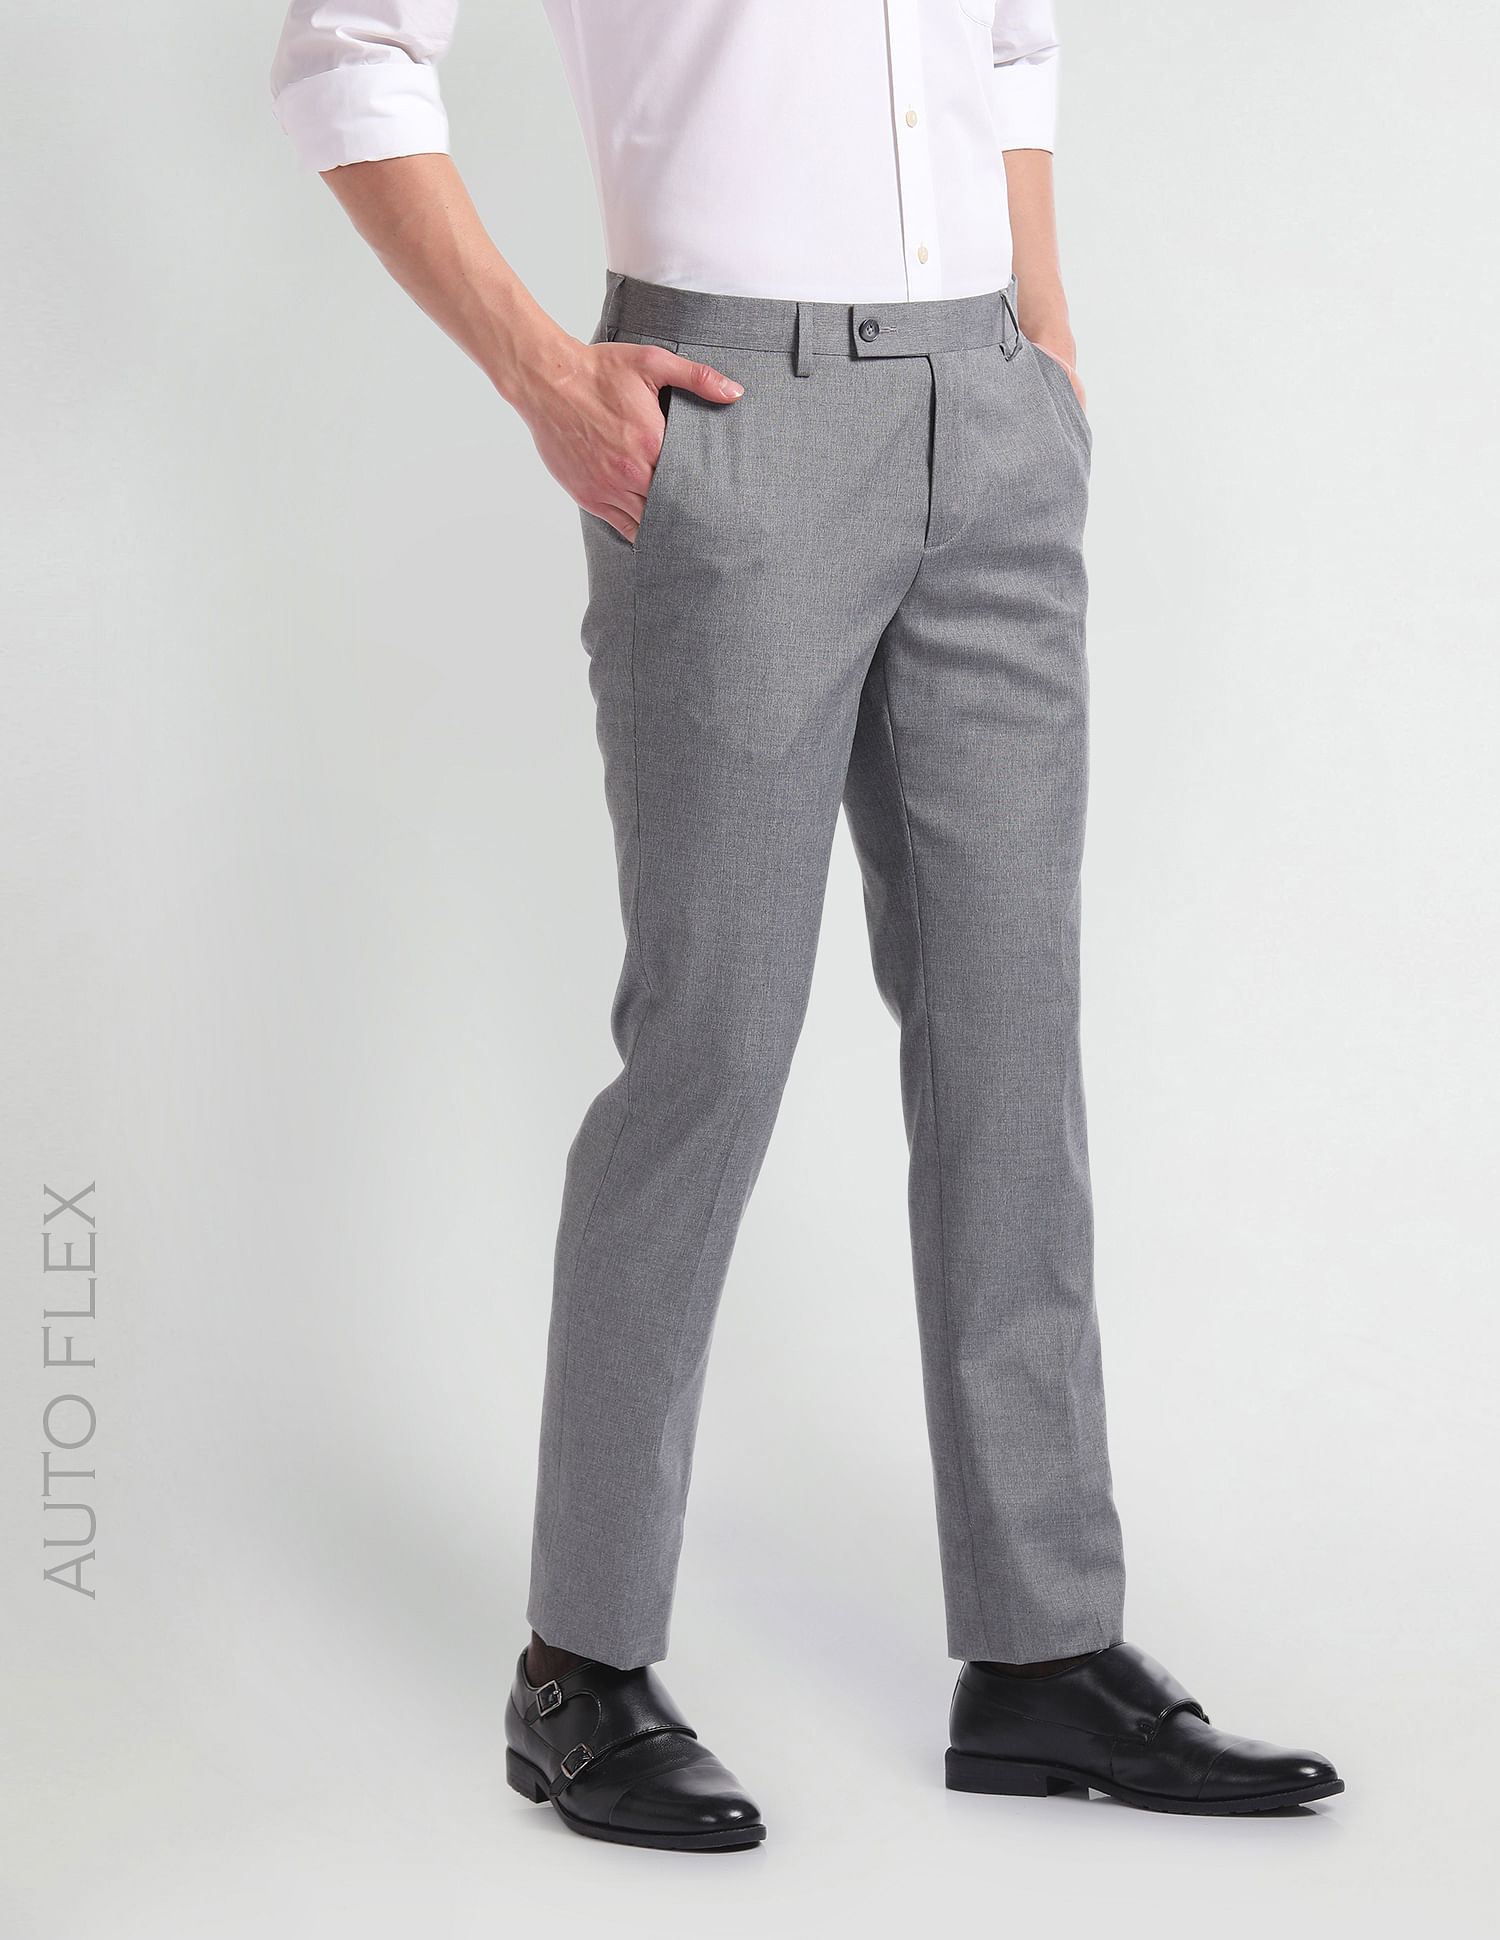 Buy Arrow Jackson Super Slim Fit Smart Flex Formal Trousers - NNNOW.com